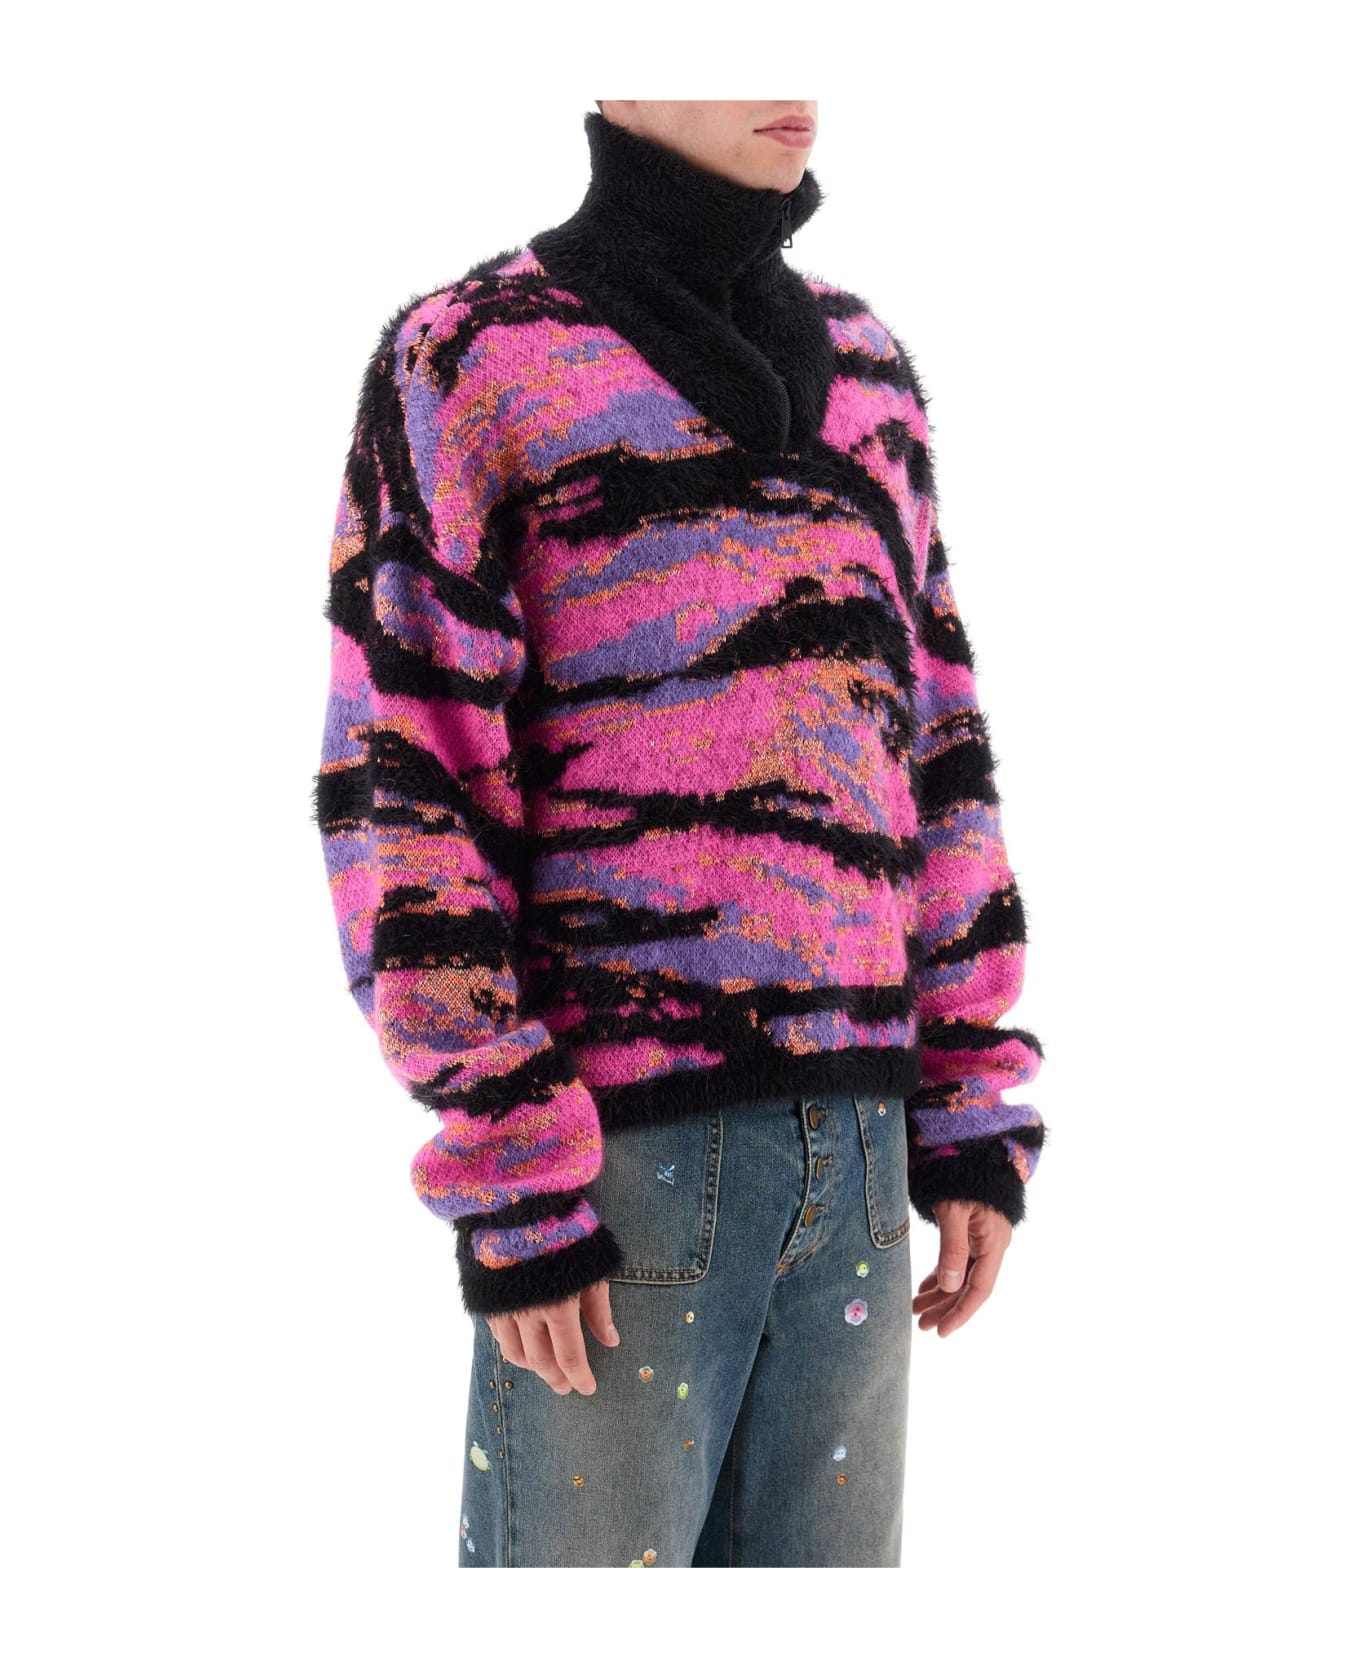 ERL Jacquard Turtleneck Sweater - ERL PINK RAVE CAMO 1 (Black)